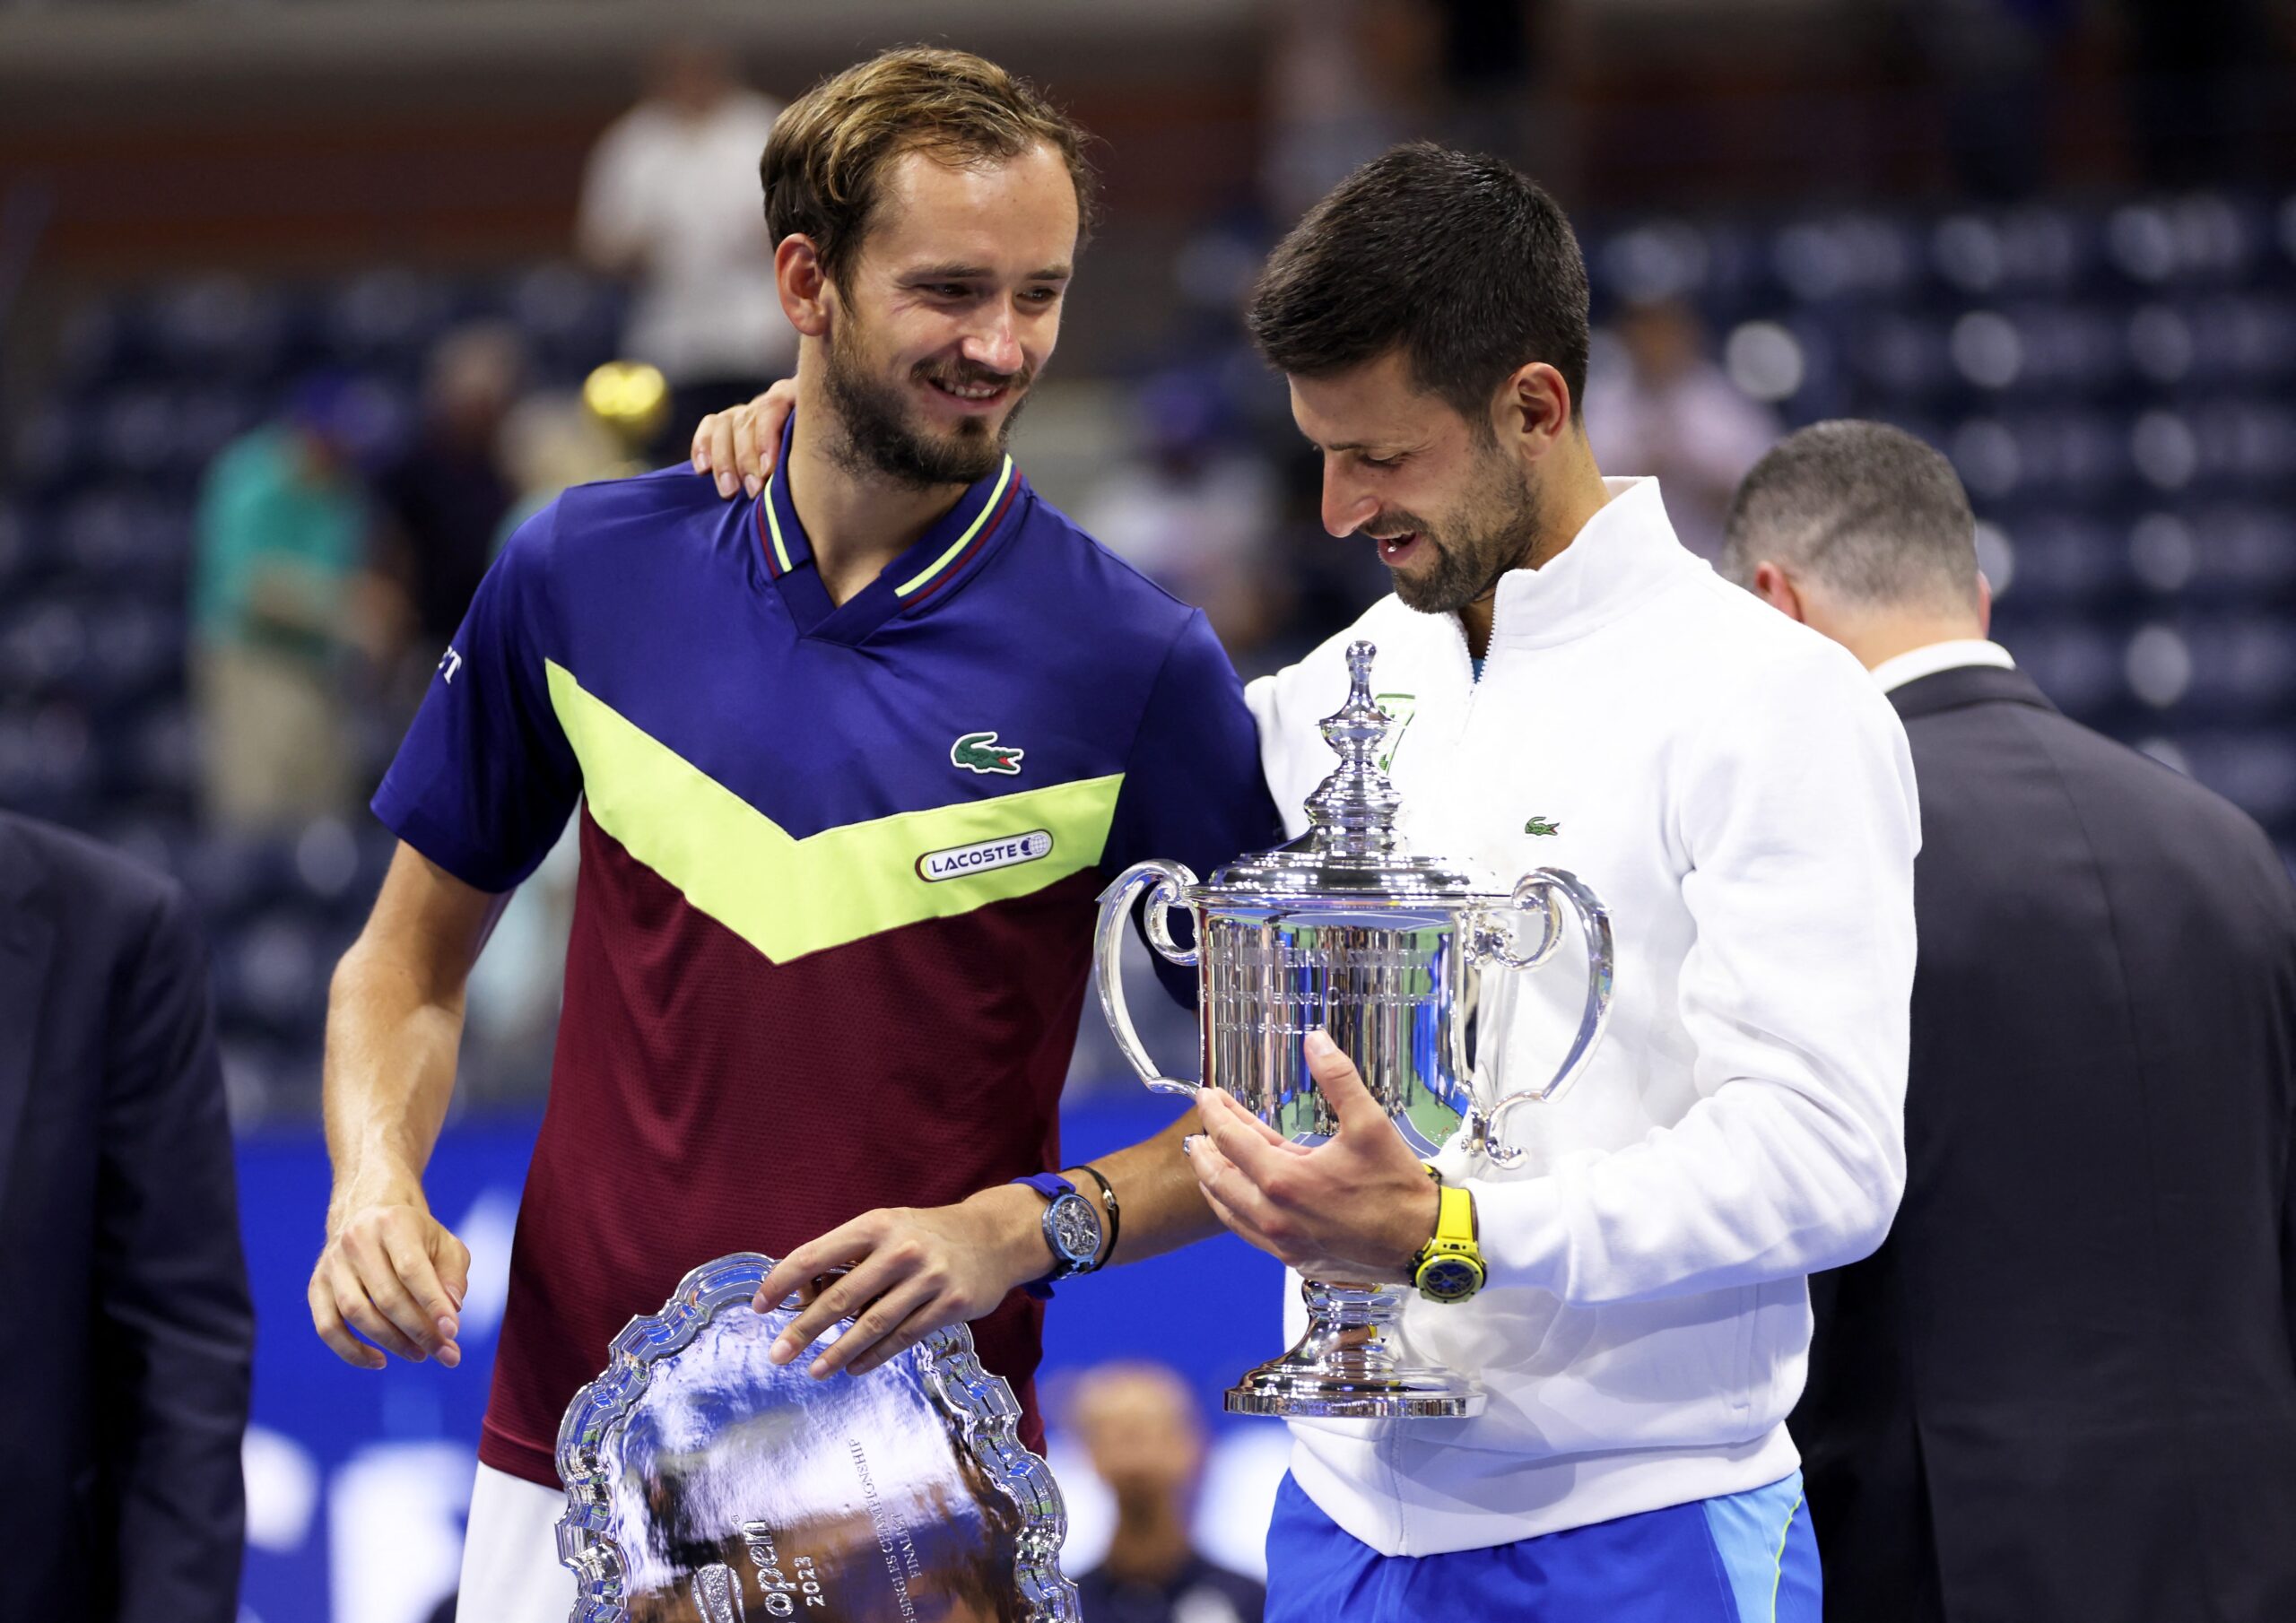 “He Treated Me Like…”: Daniil Medvedev Salutes ‘Great’ Novak Djokovic